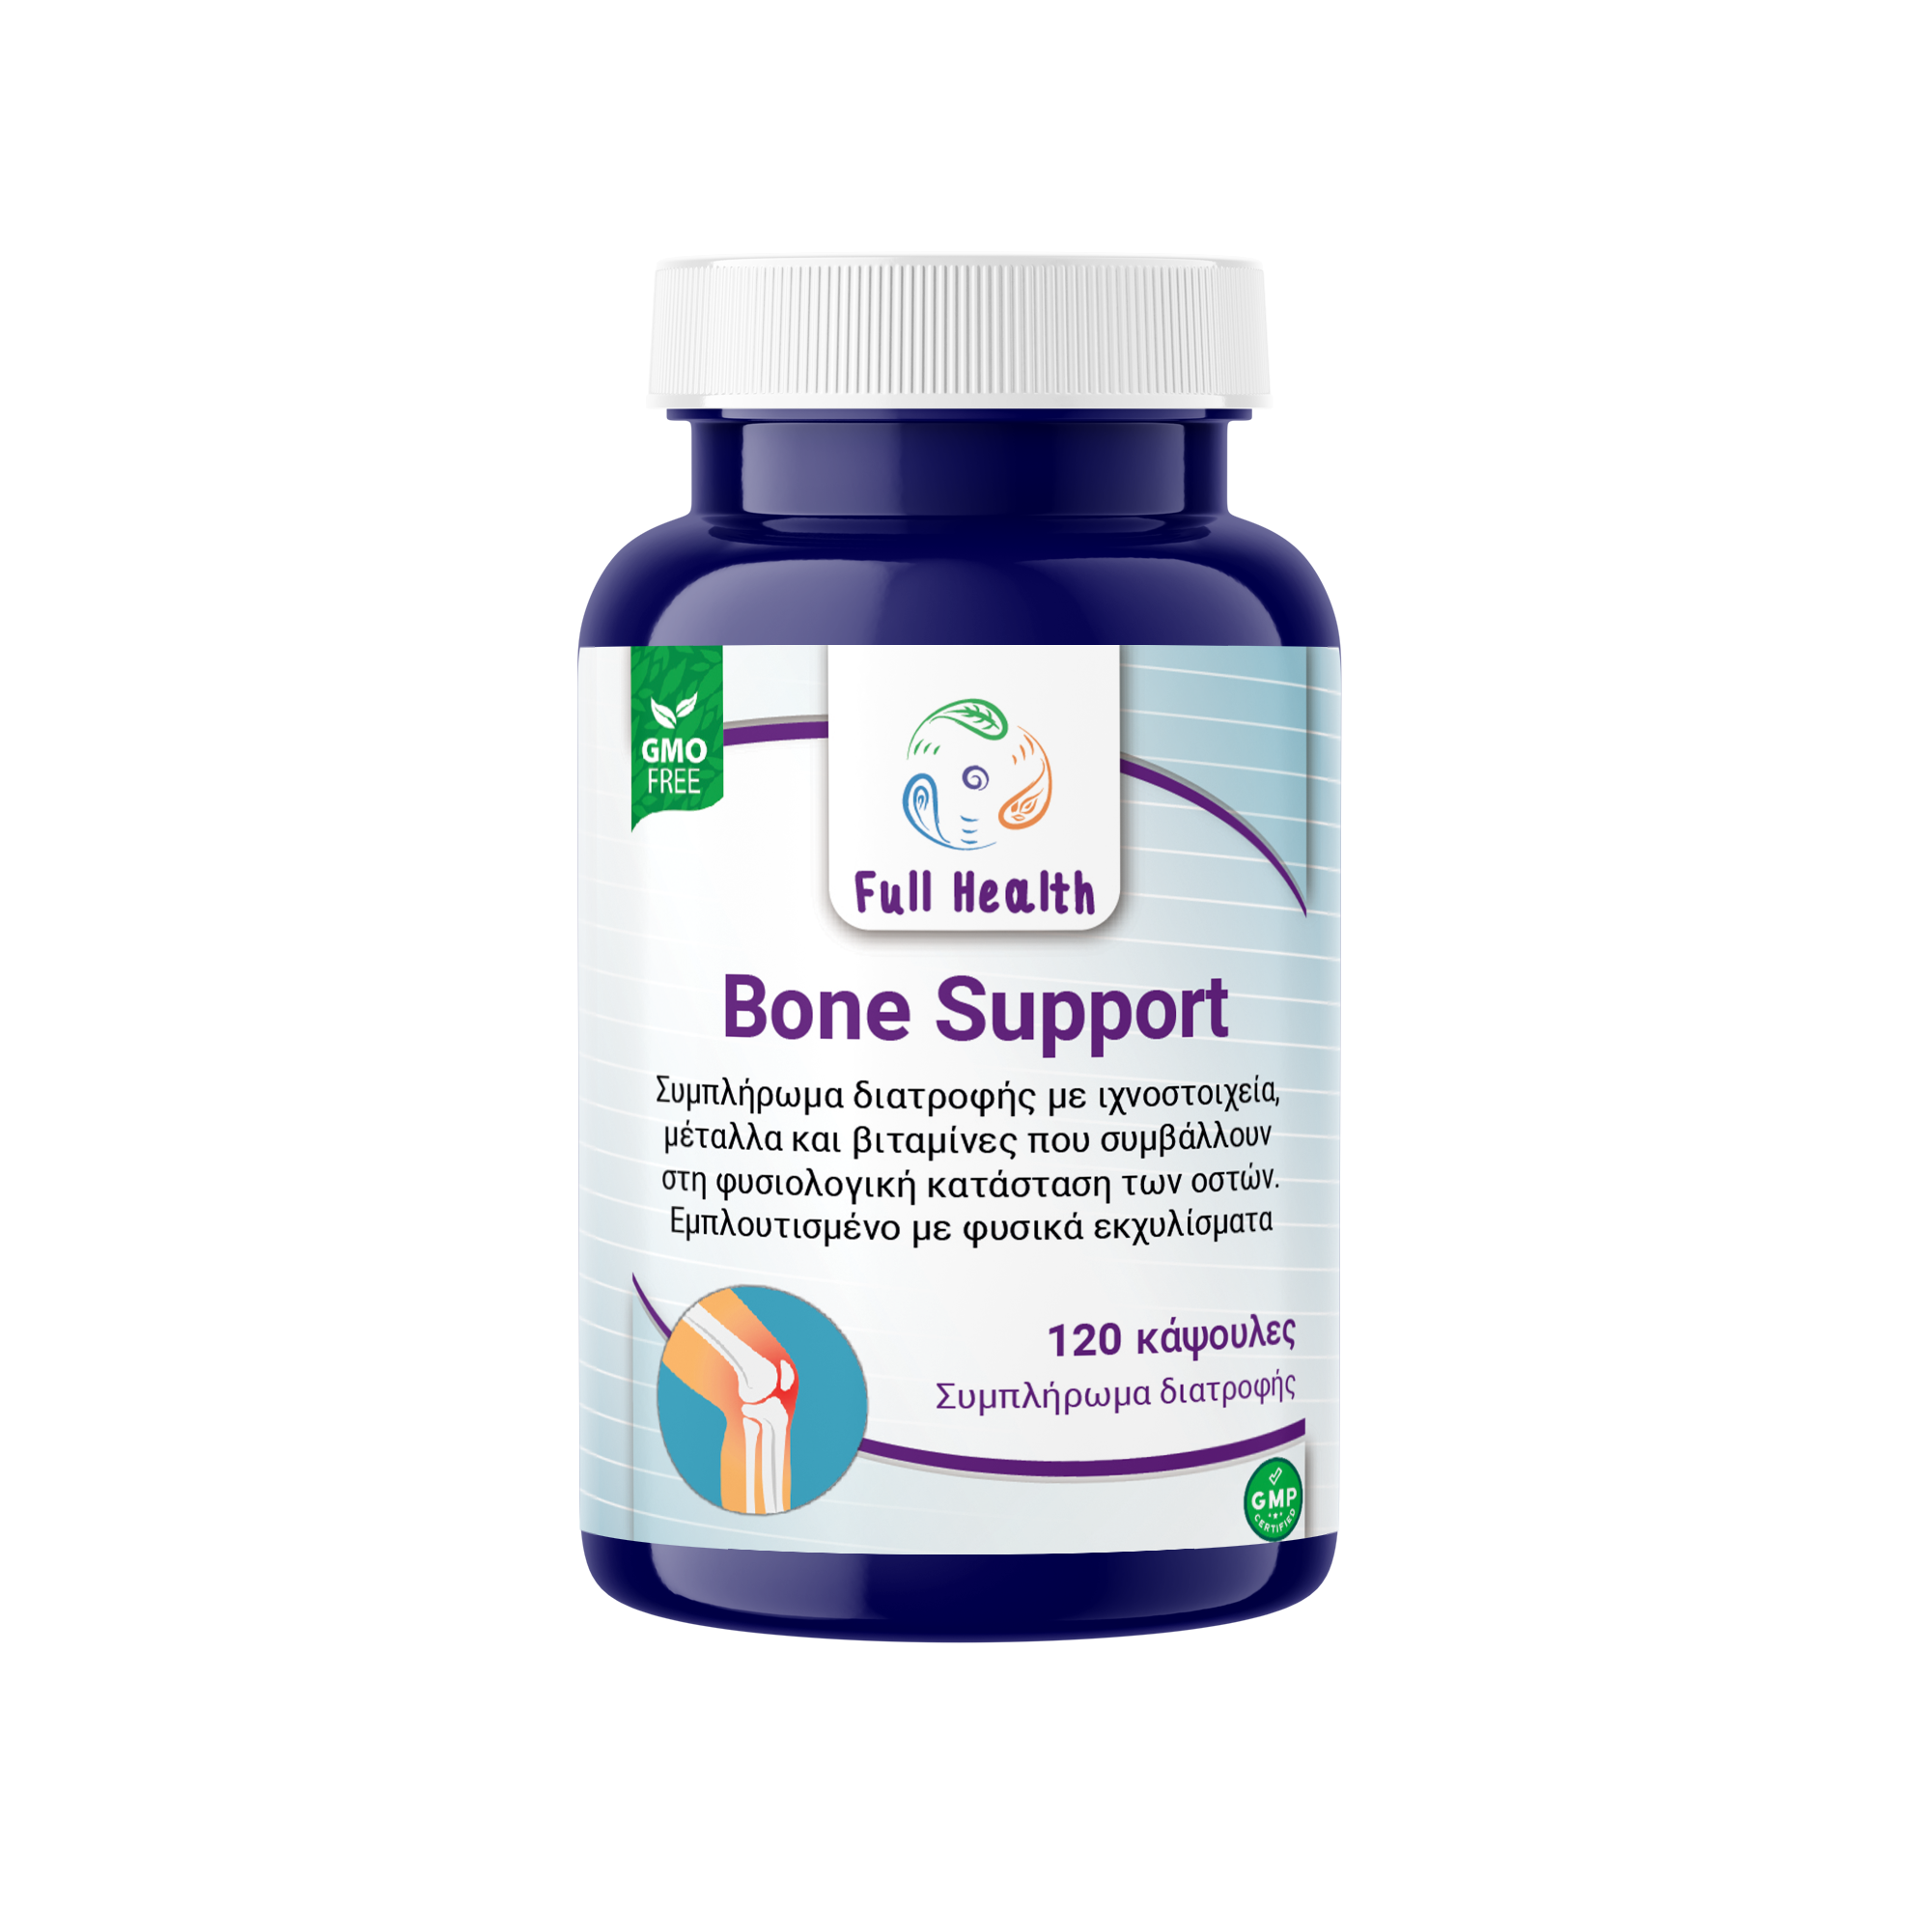 Bone Support 120 caps (Συμπλήρωμα διατροφής με ιχνοστοιχεία, μέταλλα και βιταμίνες που συμβάλλουν στην φυσιολογική κατάσταση των οστών)